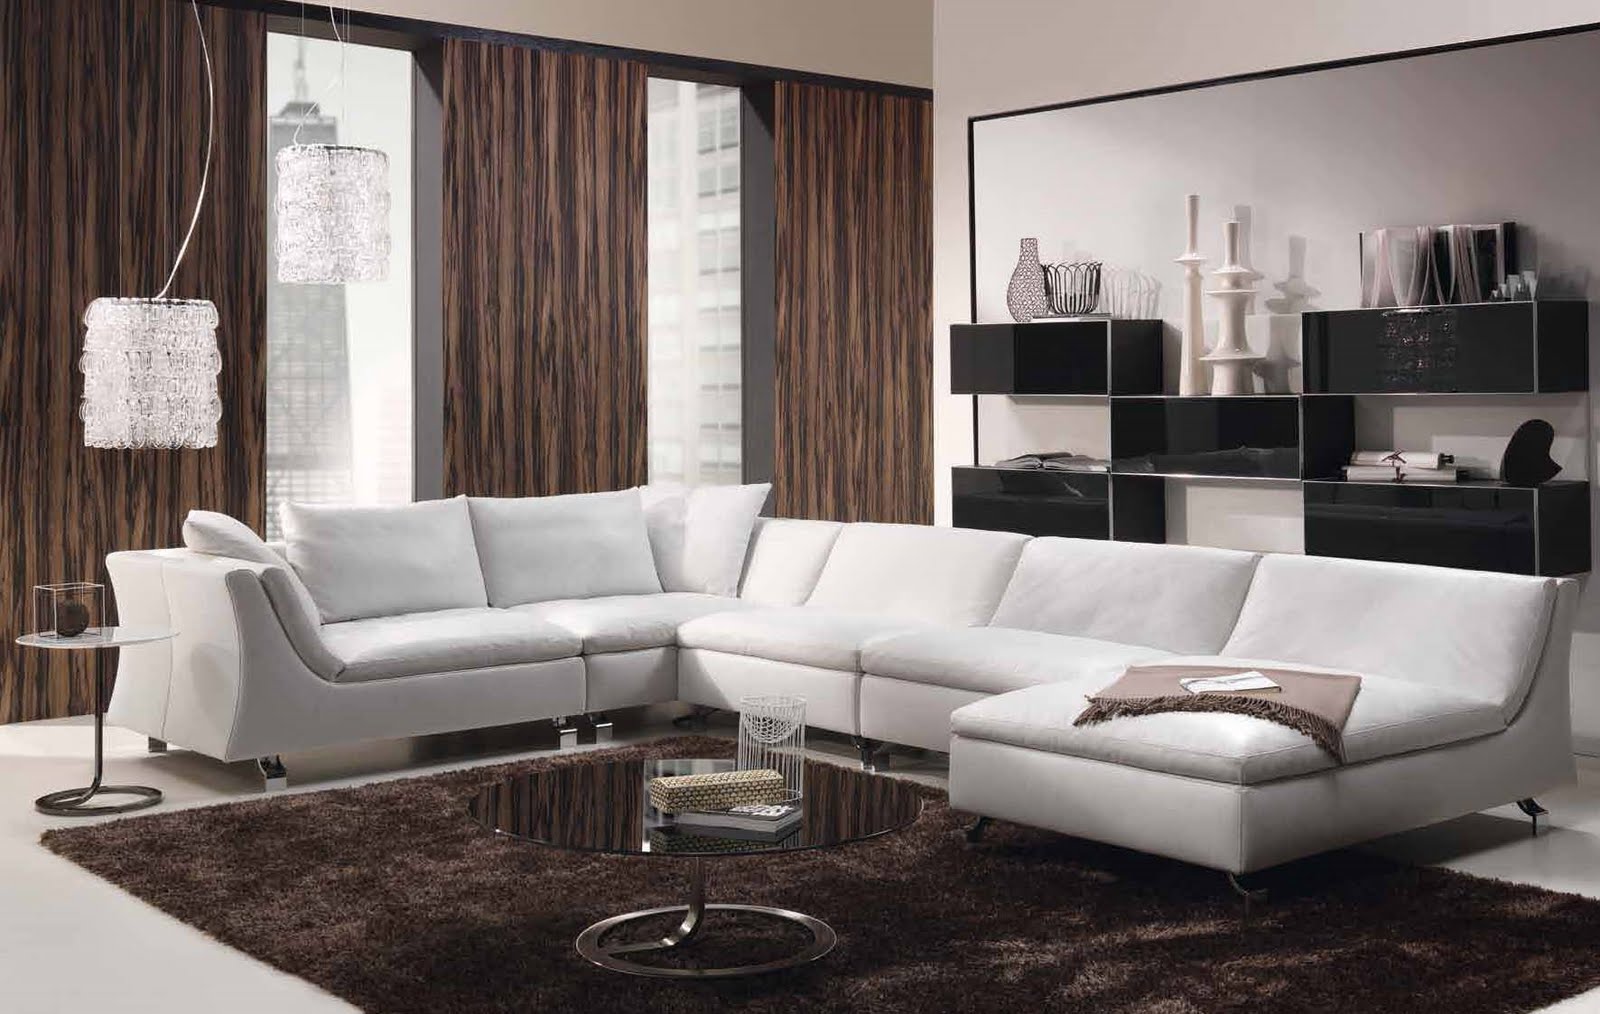 A modern interior - living room colors